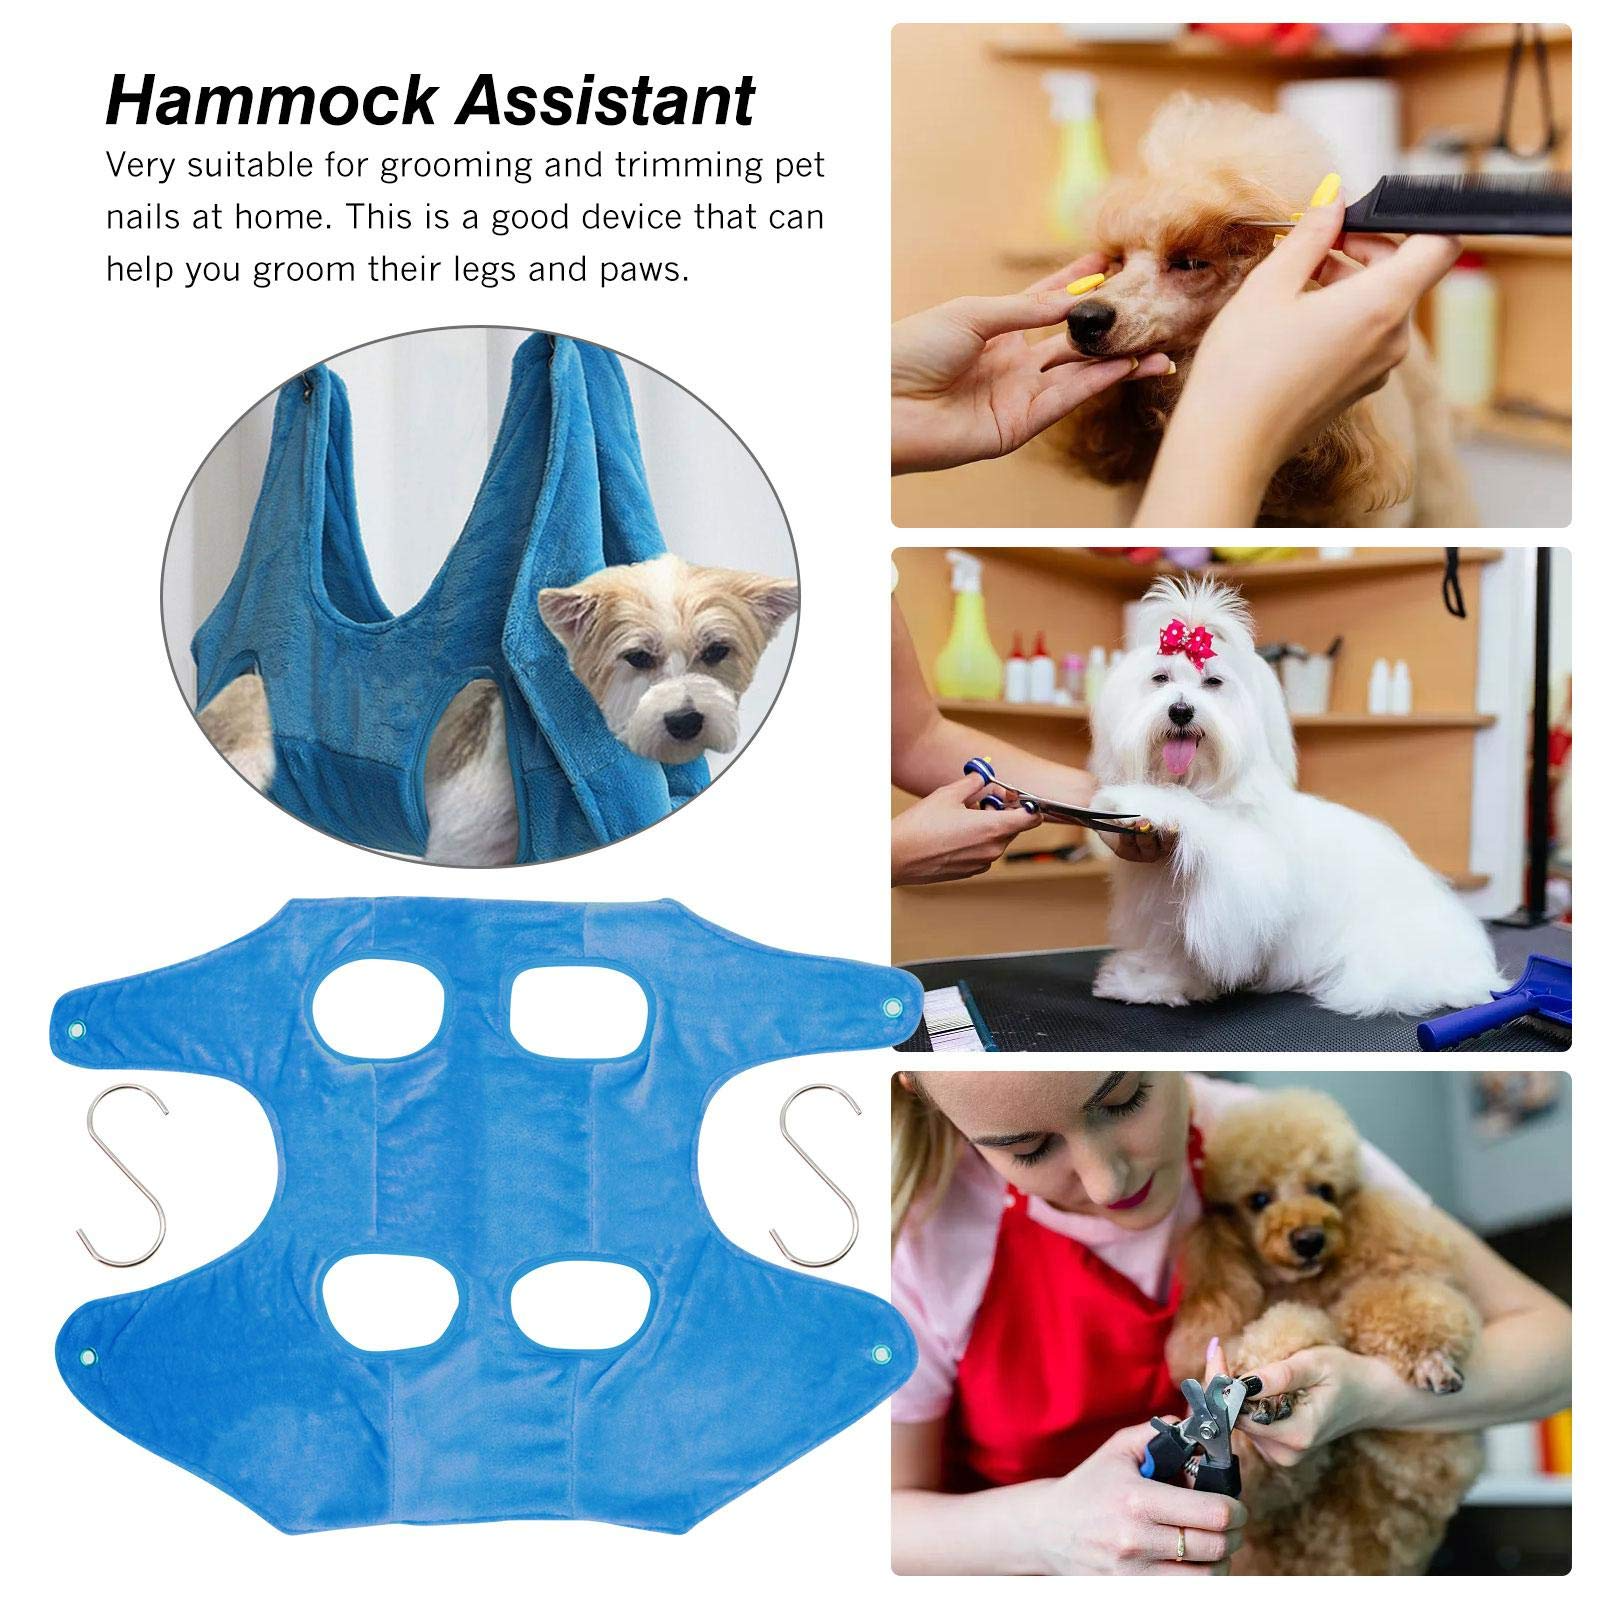 for Bathing Washing Grooming and Trimming Nail… Dog and Cat Hammock Restraint Bag Soft Comfort xiaohuihui Pet Grooming Hammock Helper 